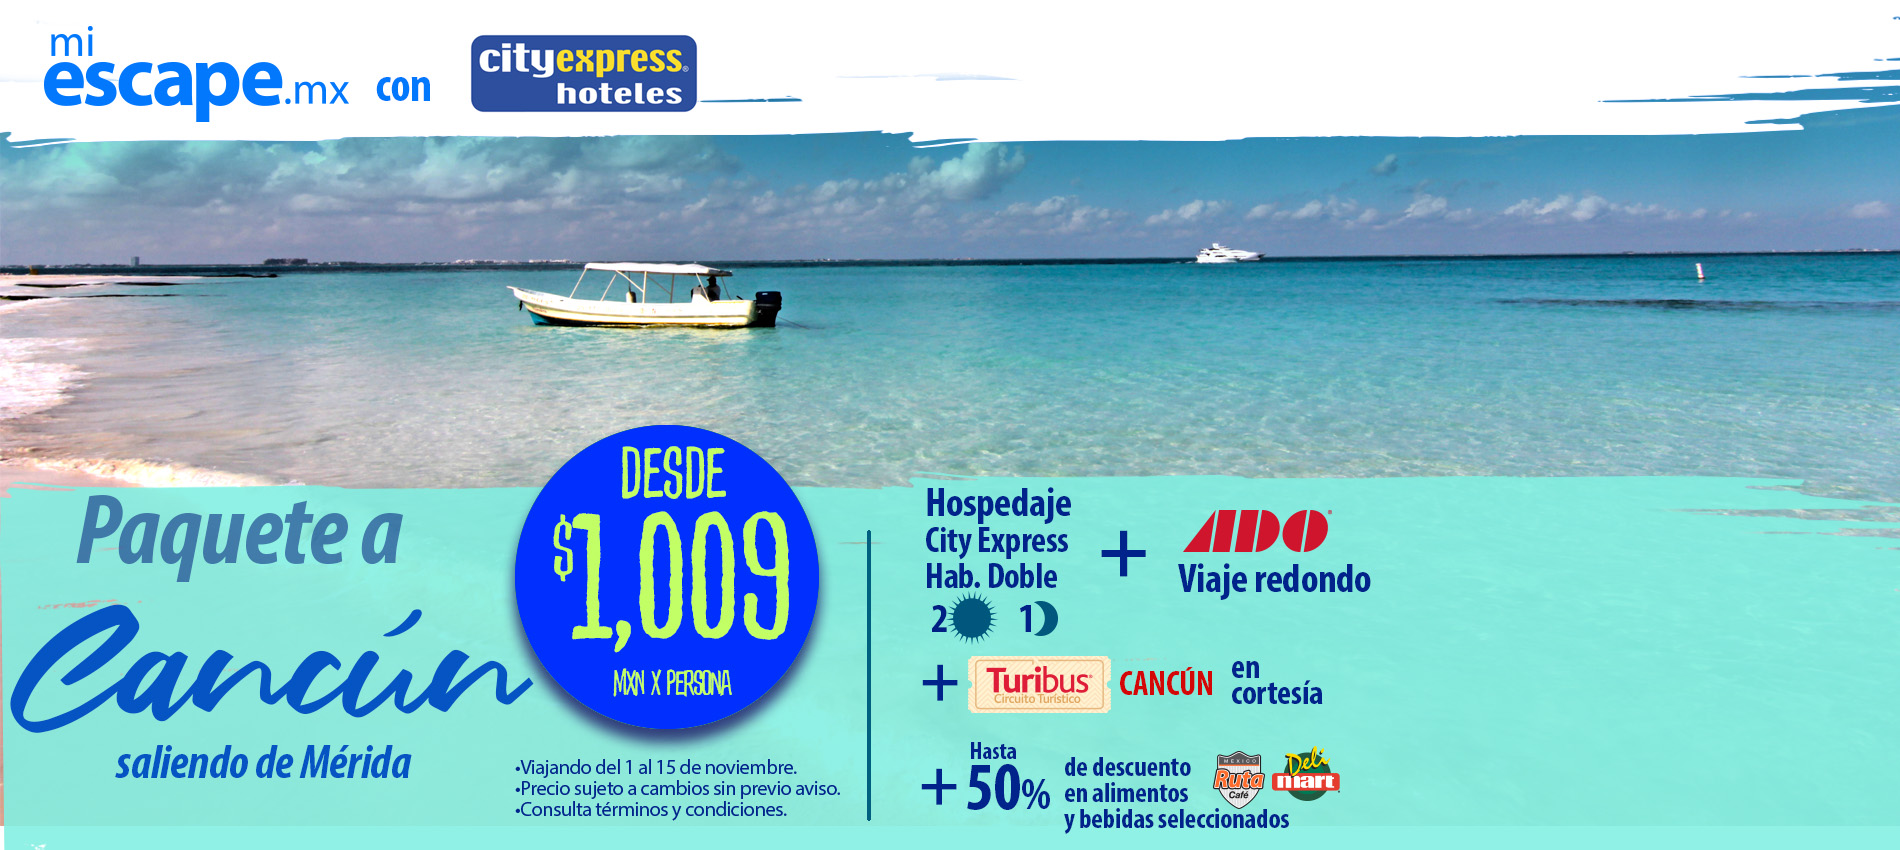 Paquete redondo (Autobús + Hotel) Mérida - Cancún | Promoción Mi Escape con City Express